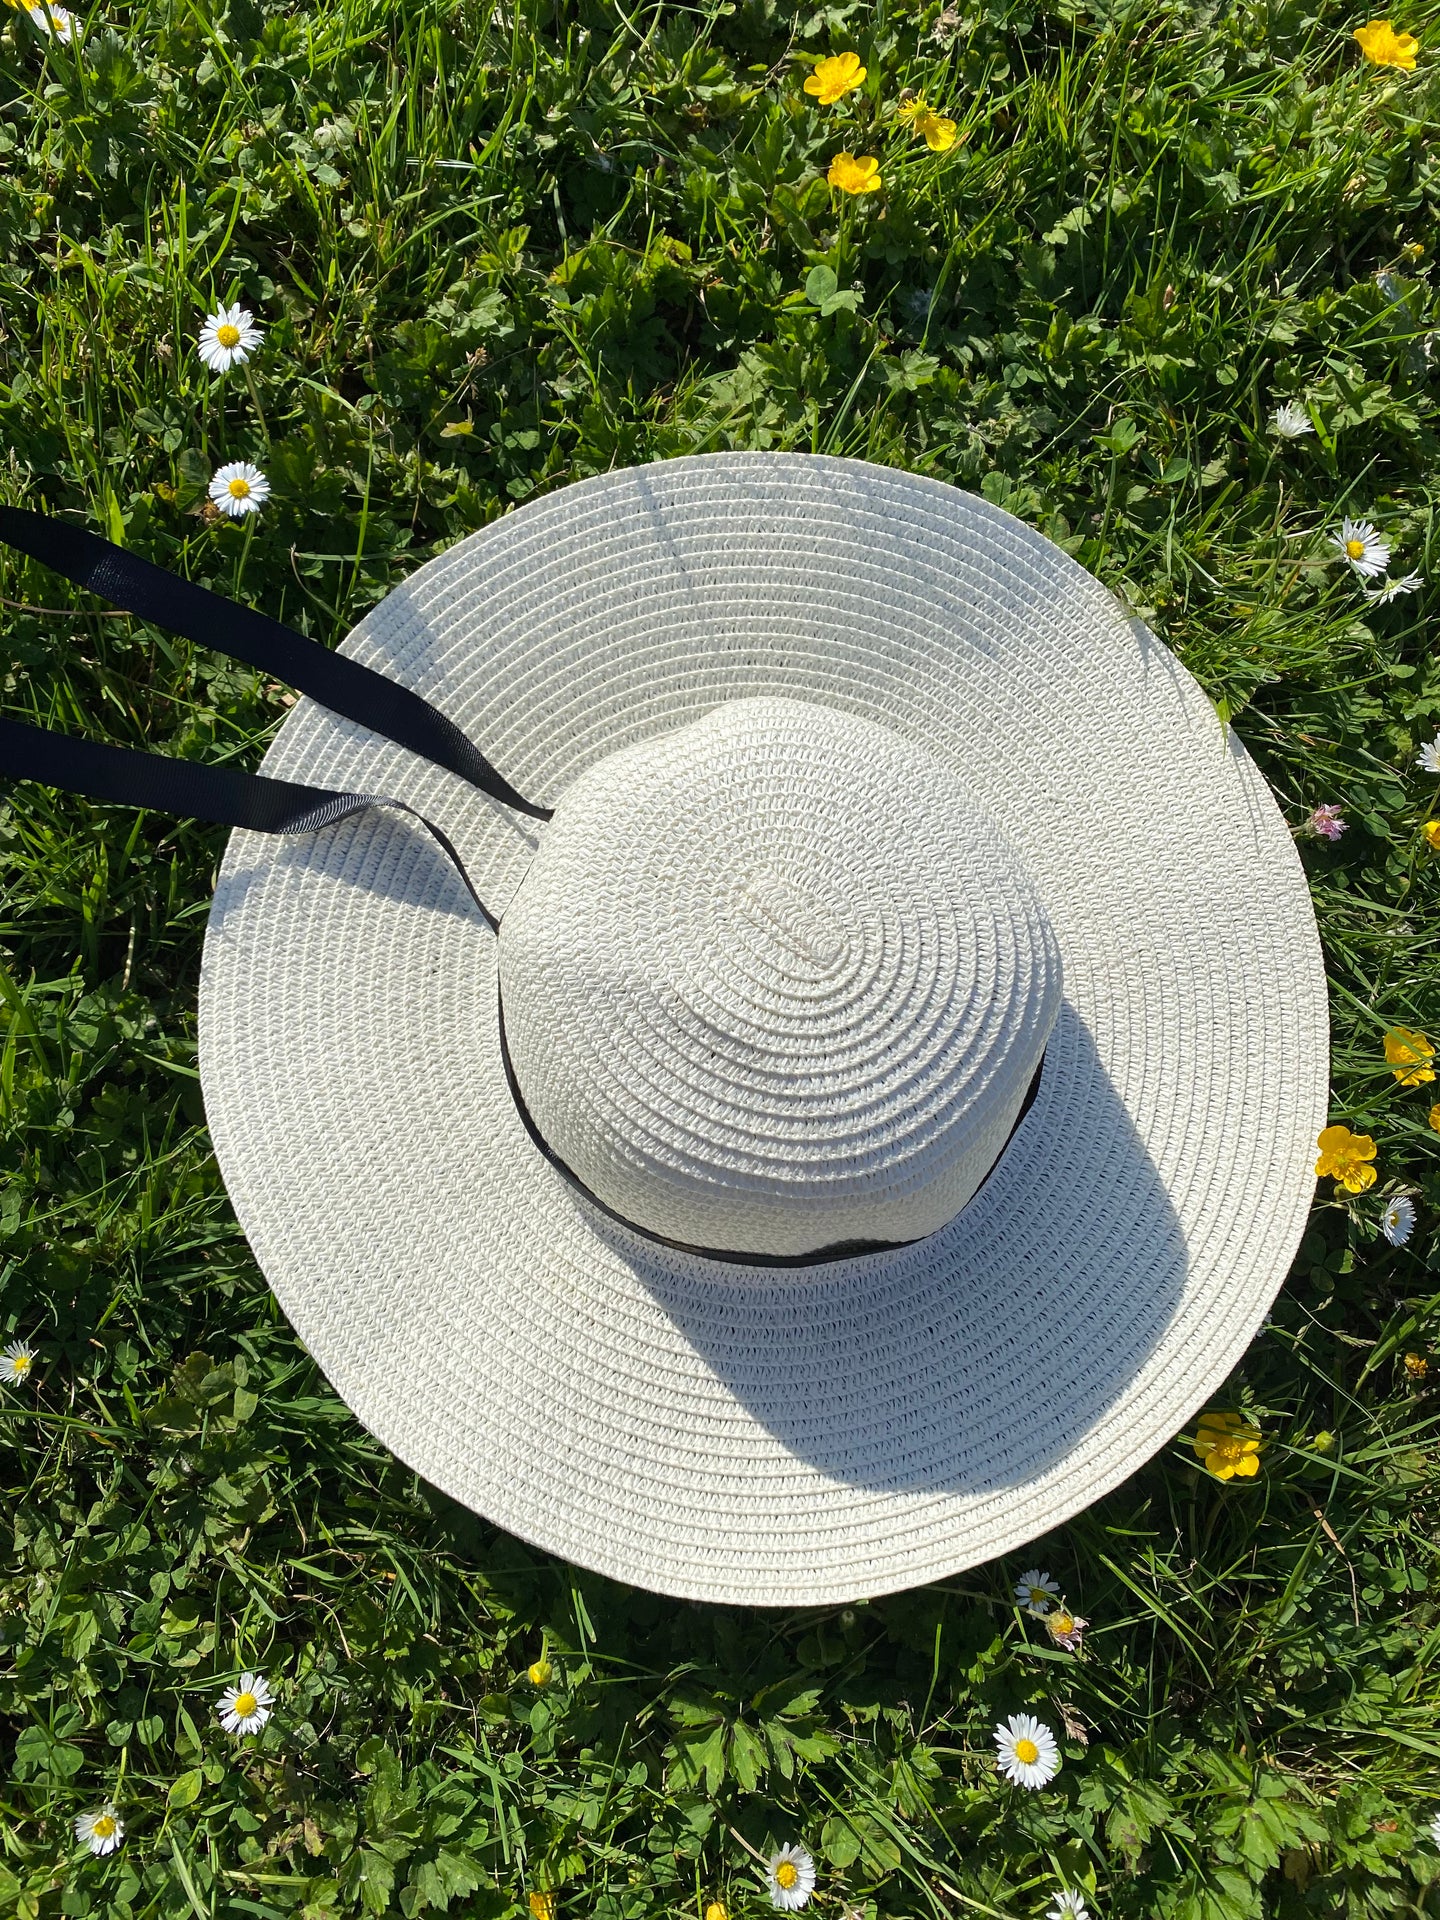 The Foldable Sun-Hat